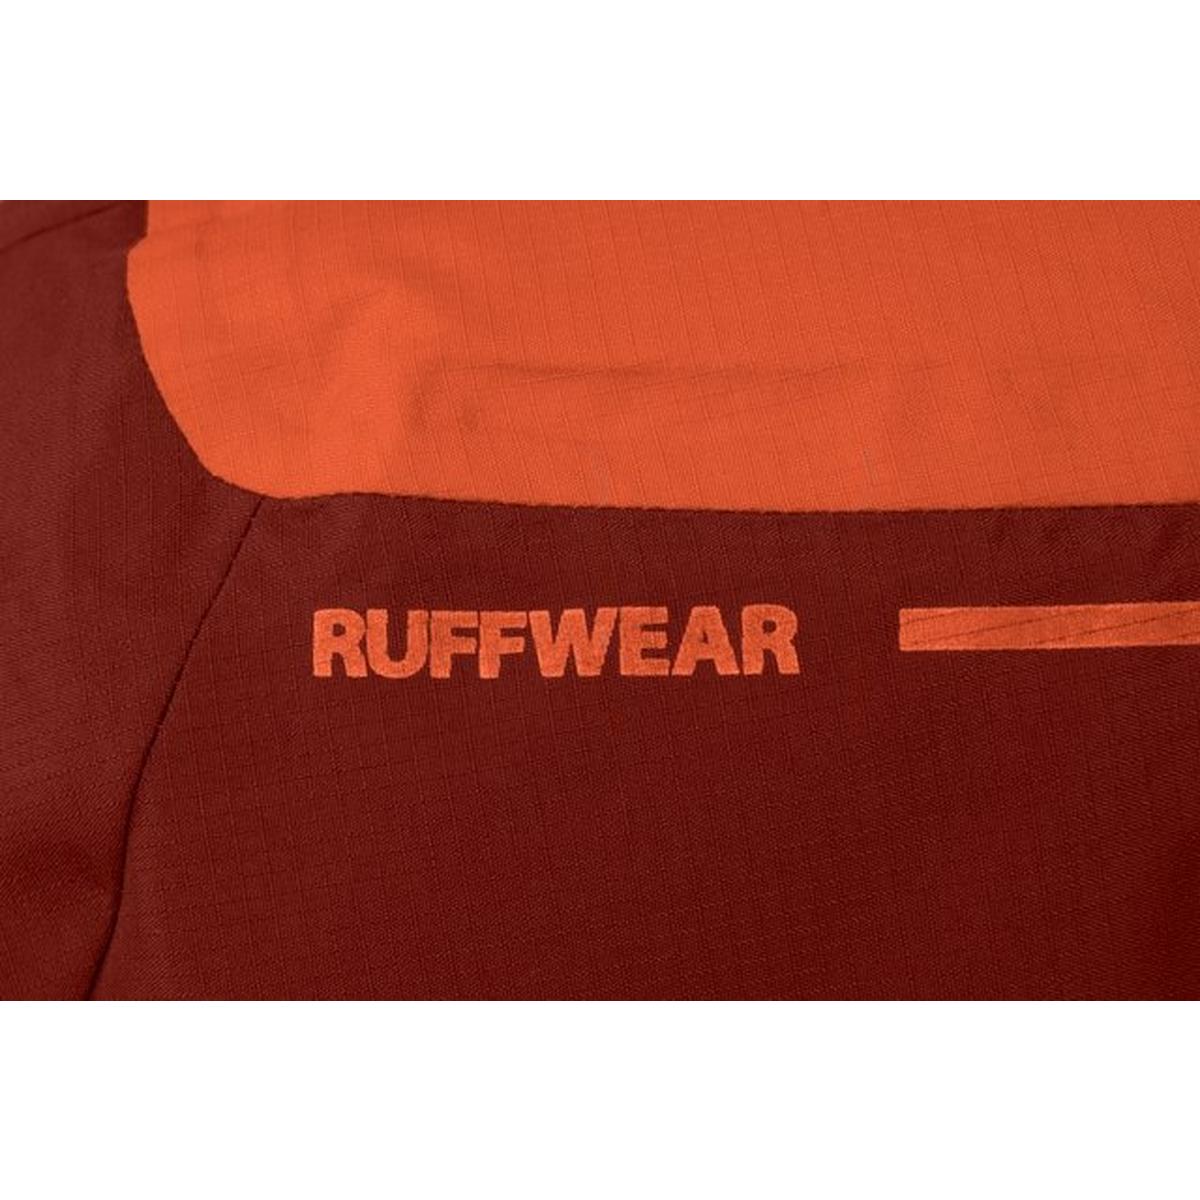 Ruffwear Vert Jacket - Canyonlands Orange